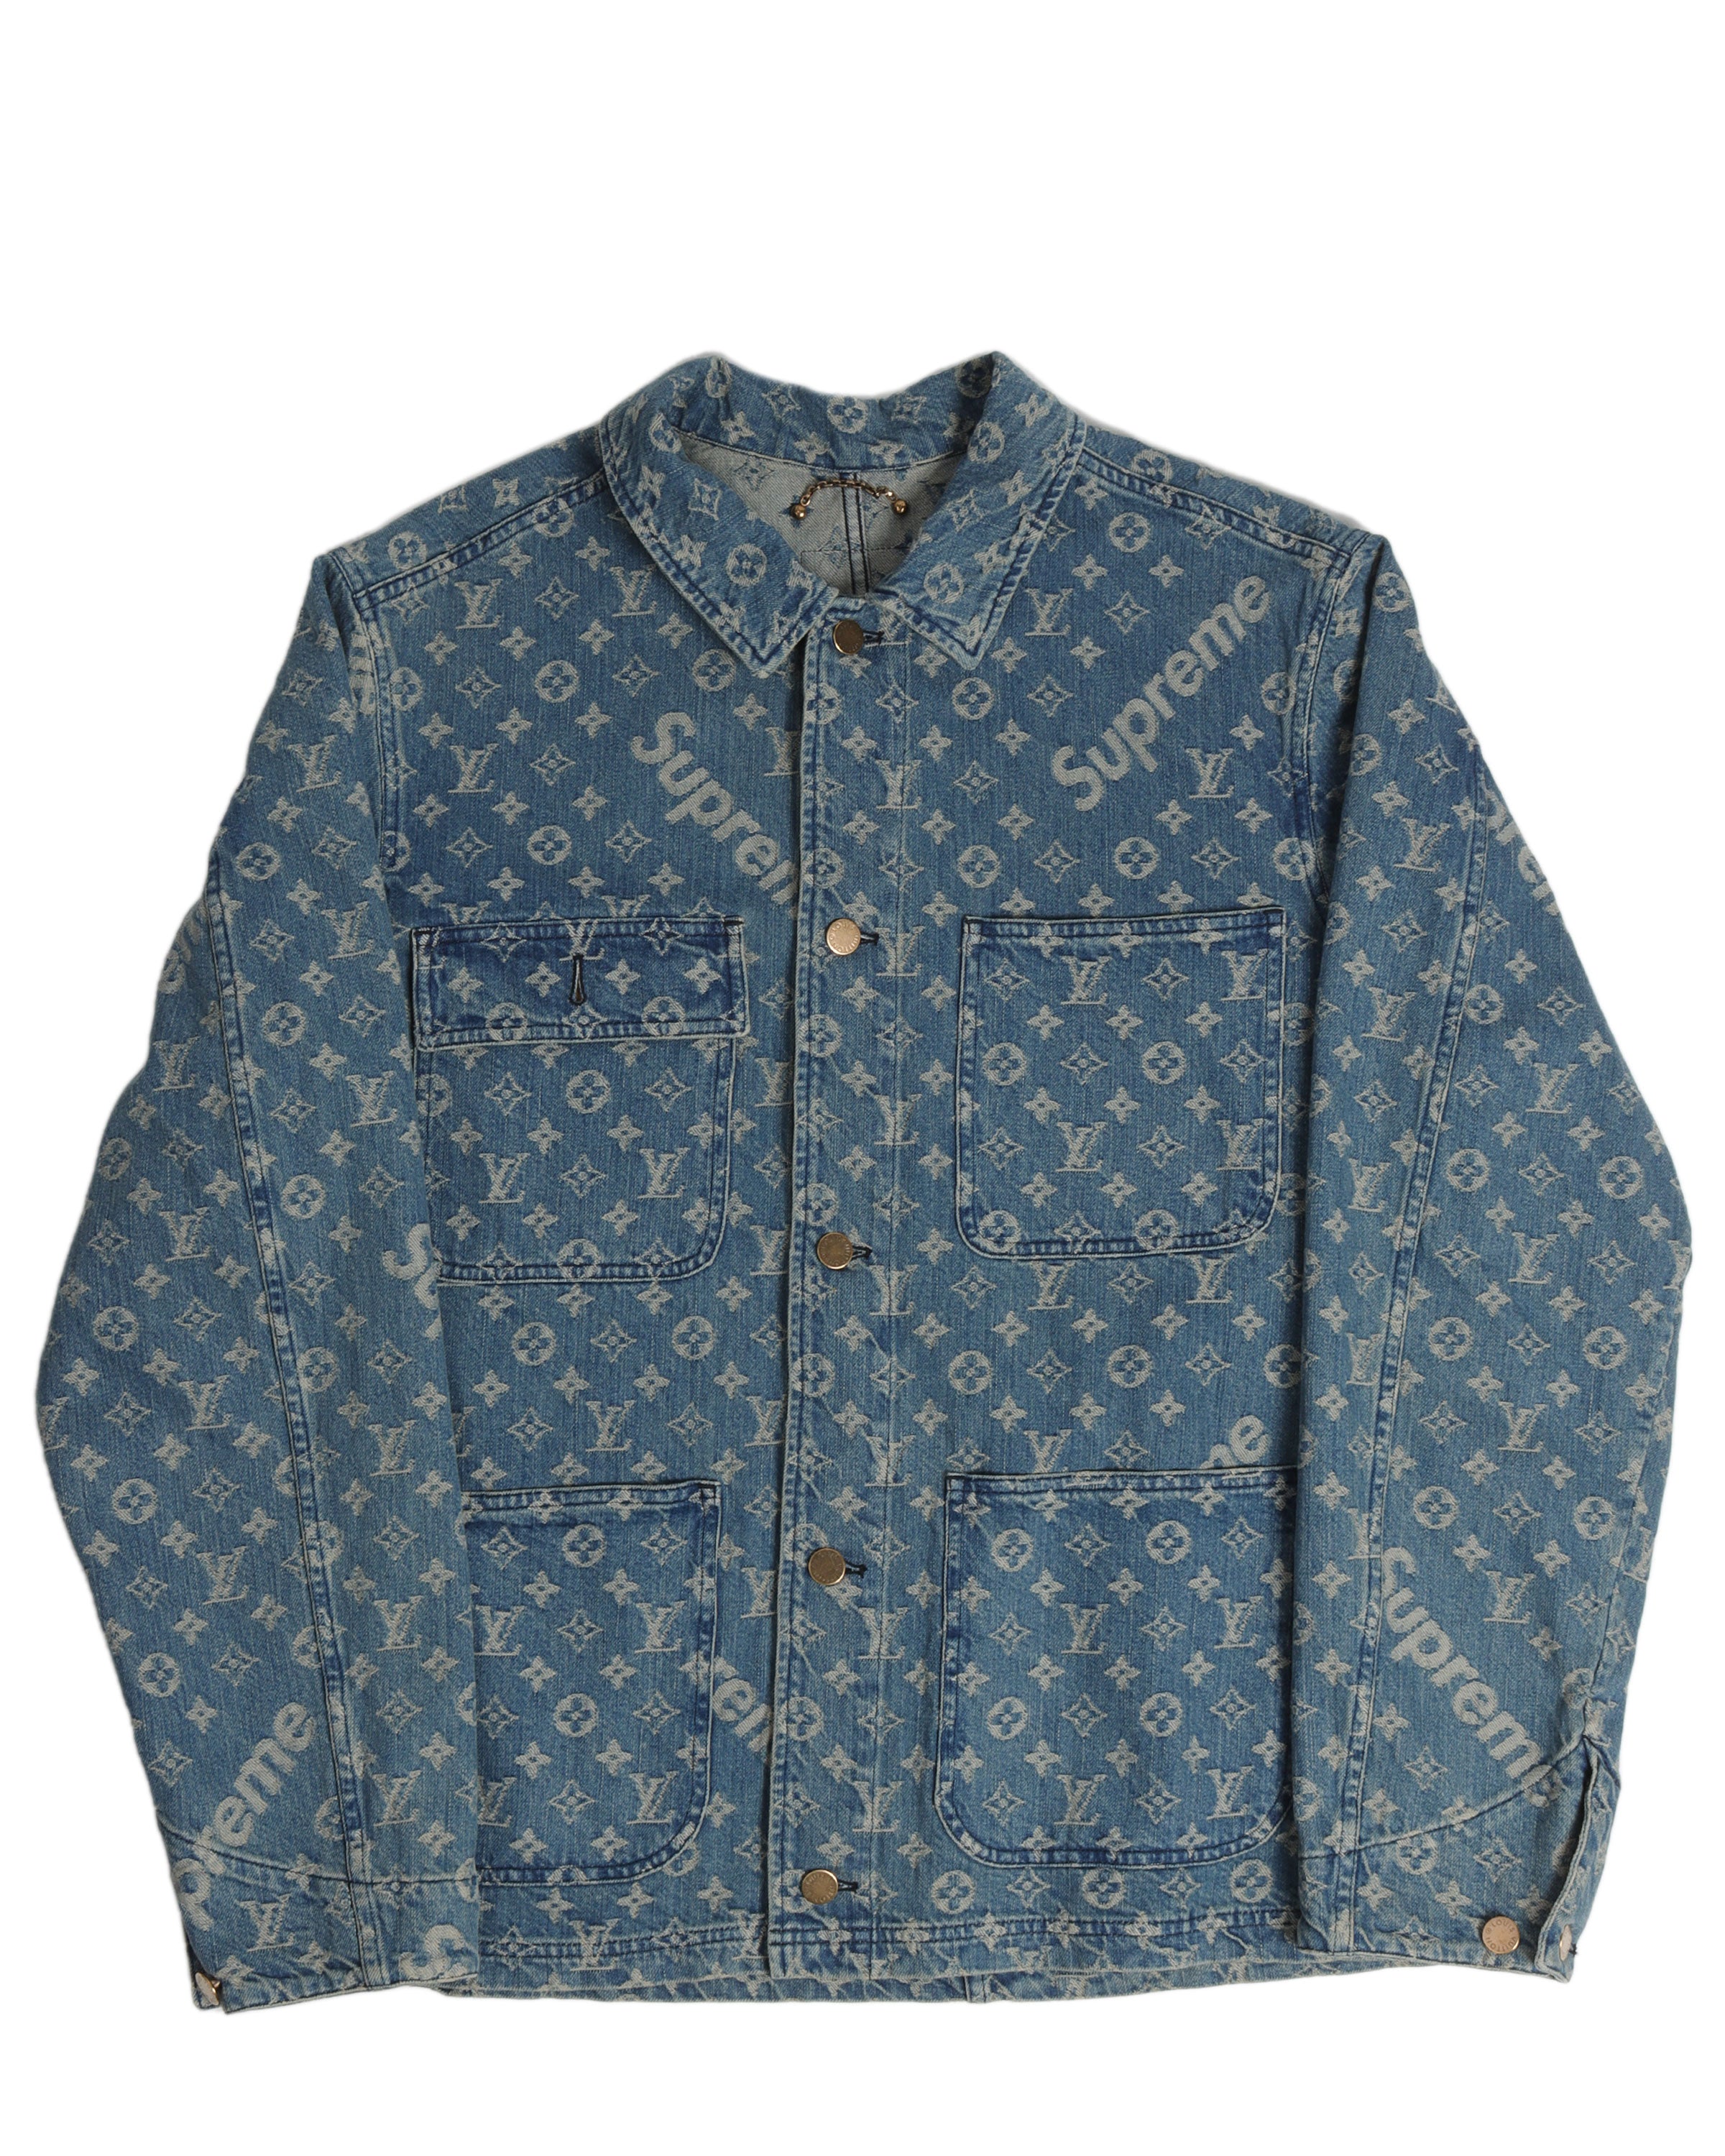 Buy Supreme Louis Vuitton SUPREME LOUISVUITTON Size: 48 17AW LV Jacquard  Denim Chore Coat Monogram jacquard denim jacket from Japan - Buy authentic  Plus exclusive items from Japan